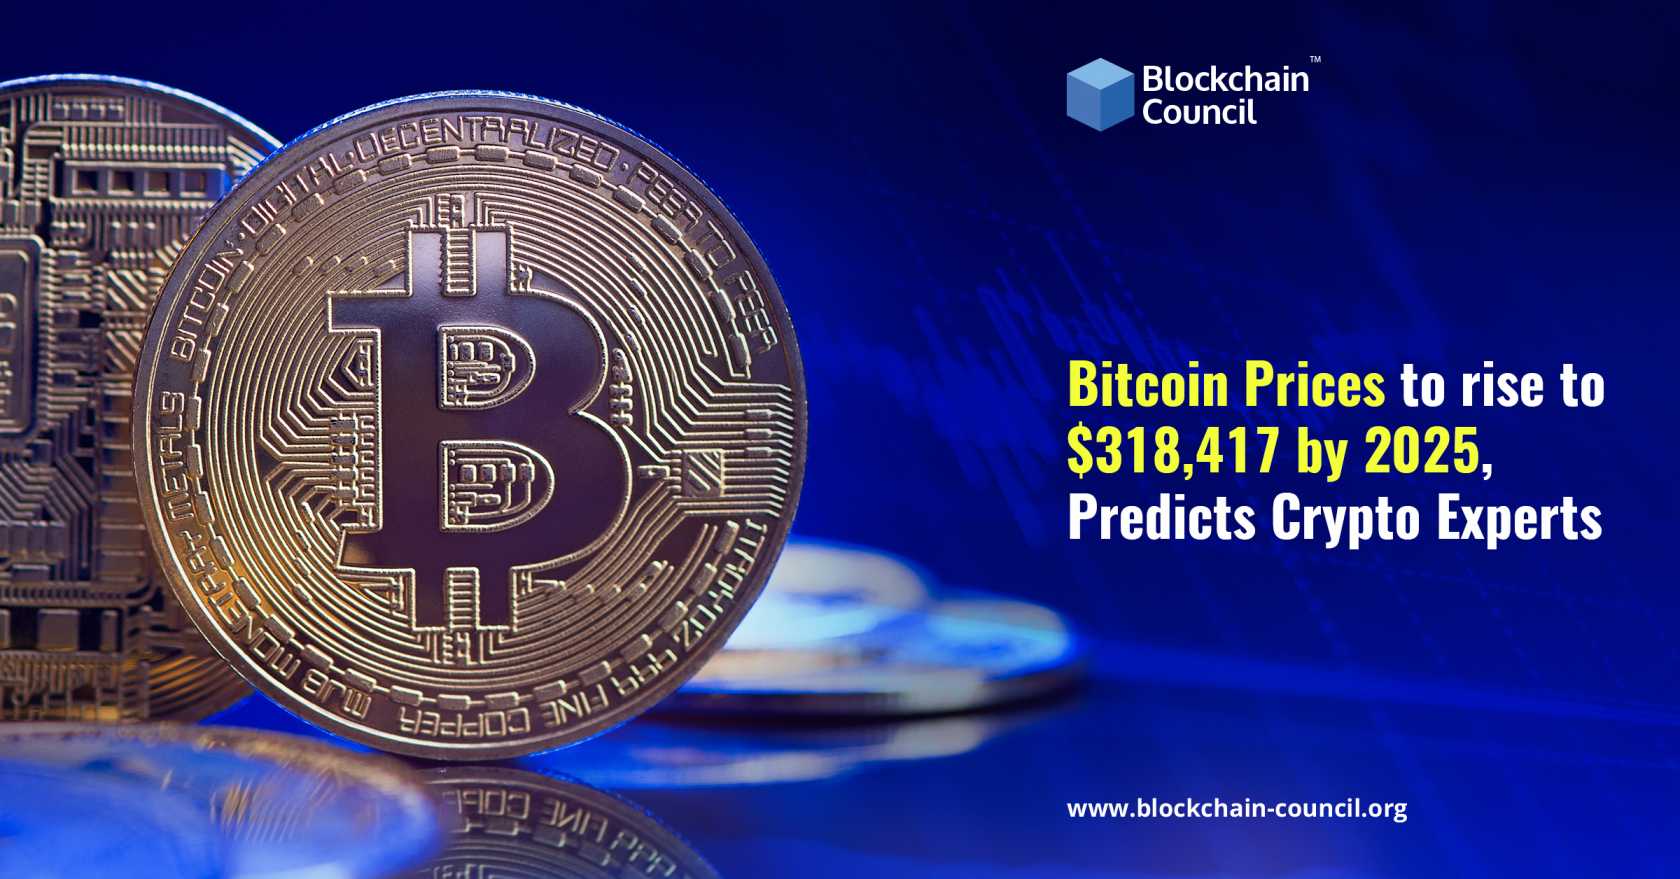 scrypt based bitcoins price